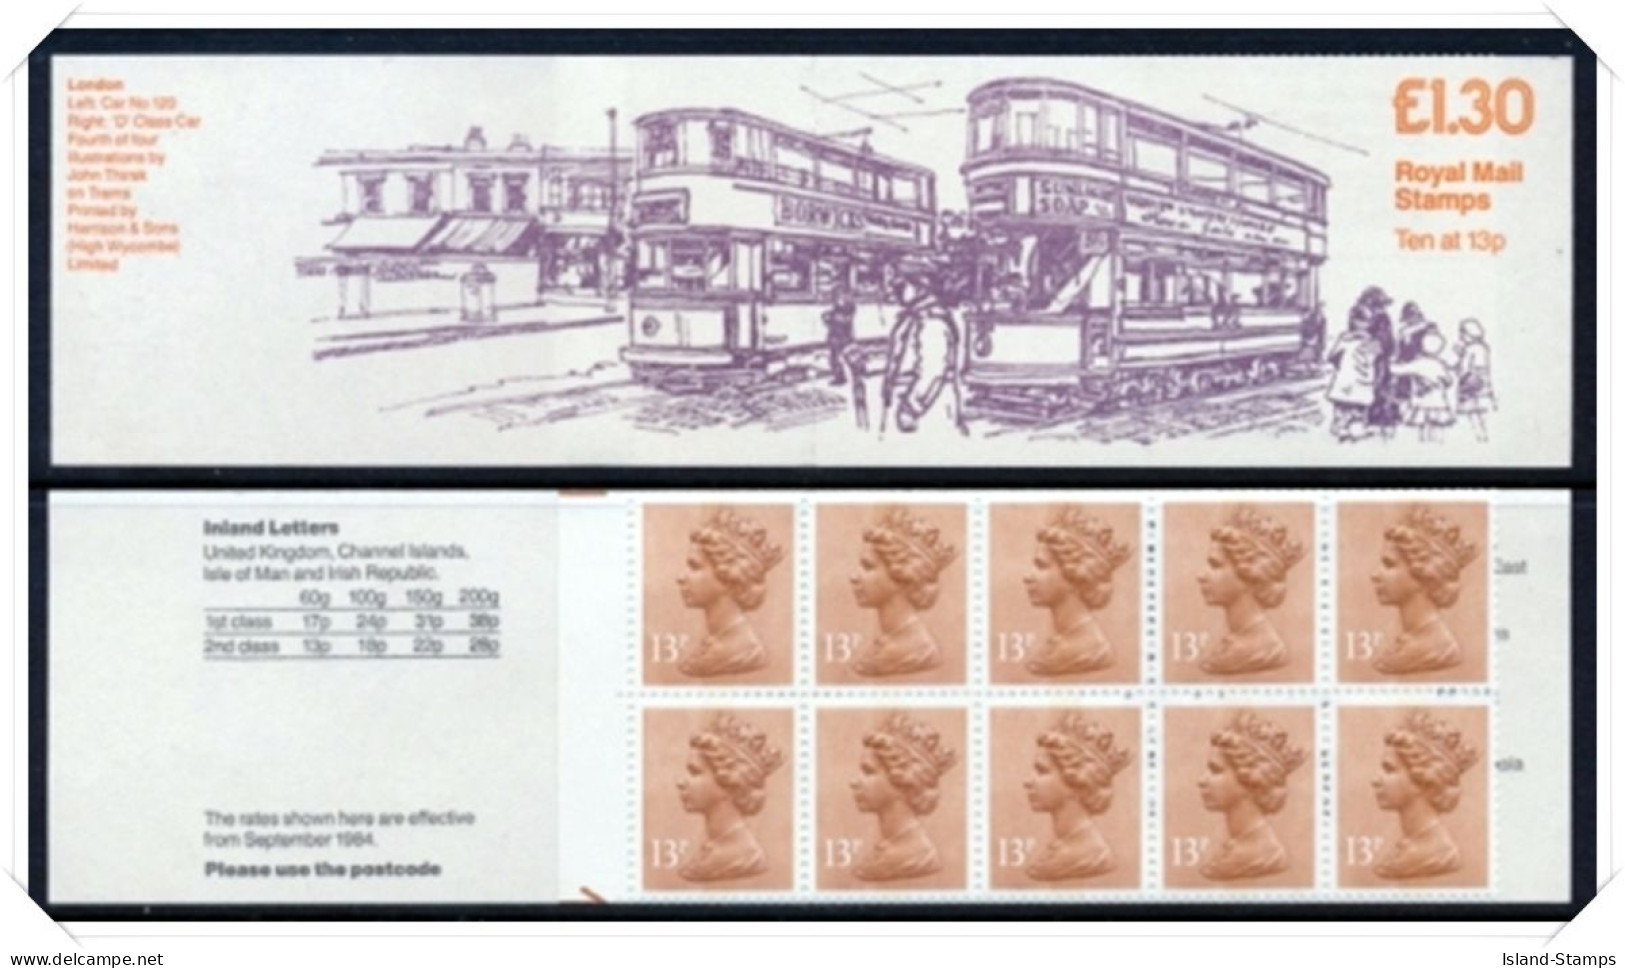 FL6a Trams Series 4 London Left Margin Plain (£1.30 Folded Booklets) NB1-4 - Carnets